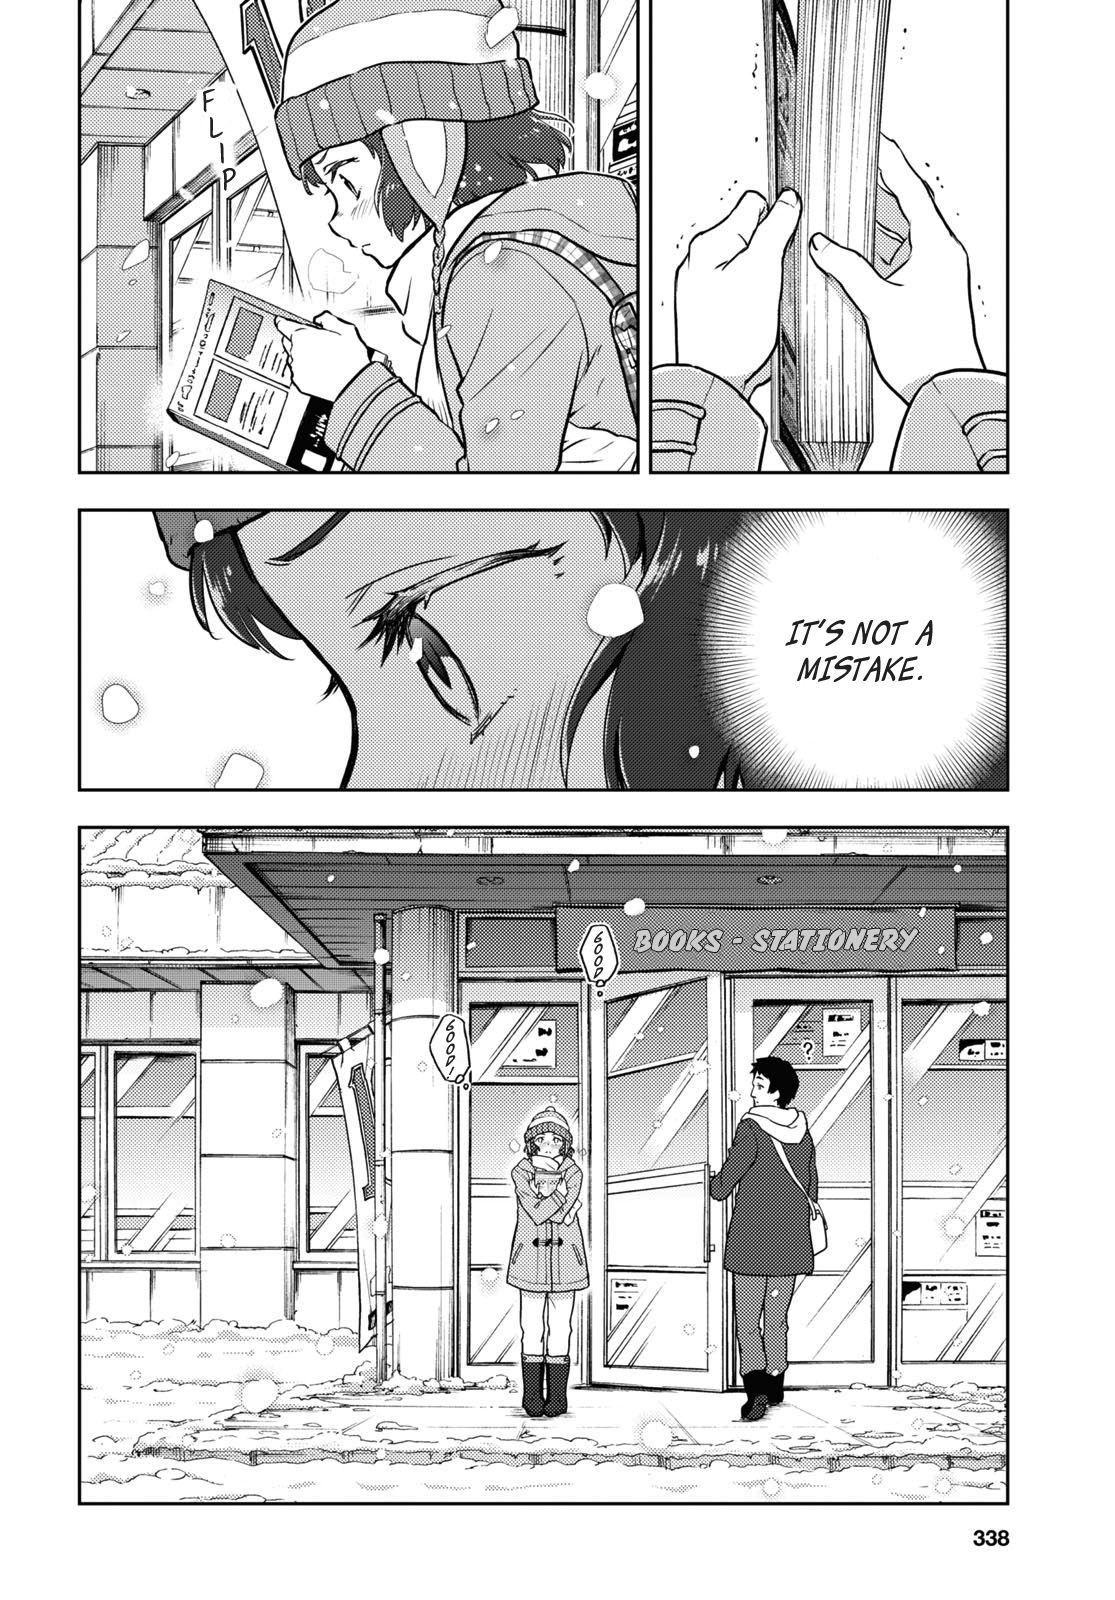 Hyouka chapter 90 page 4